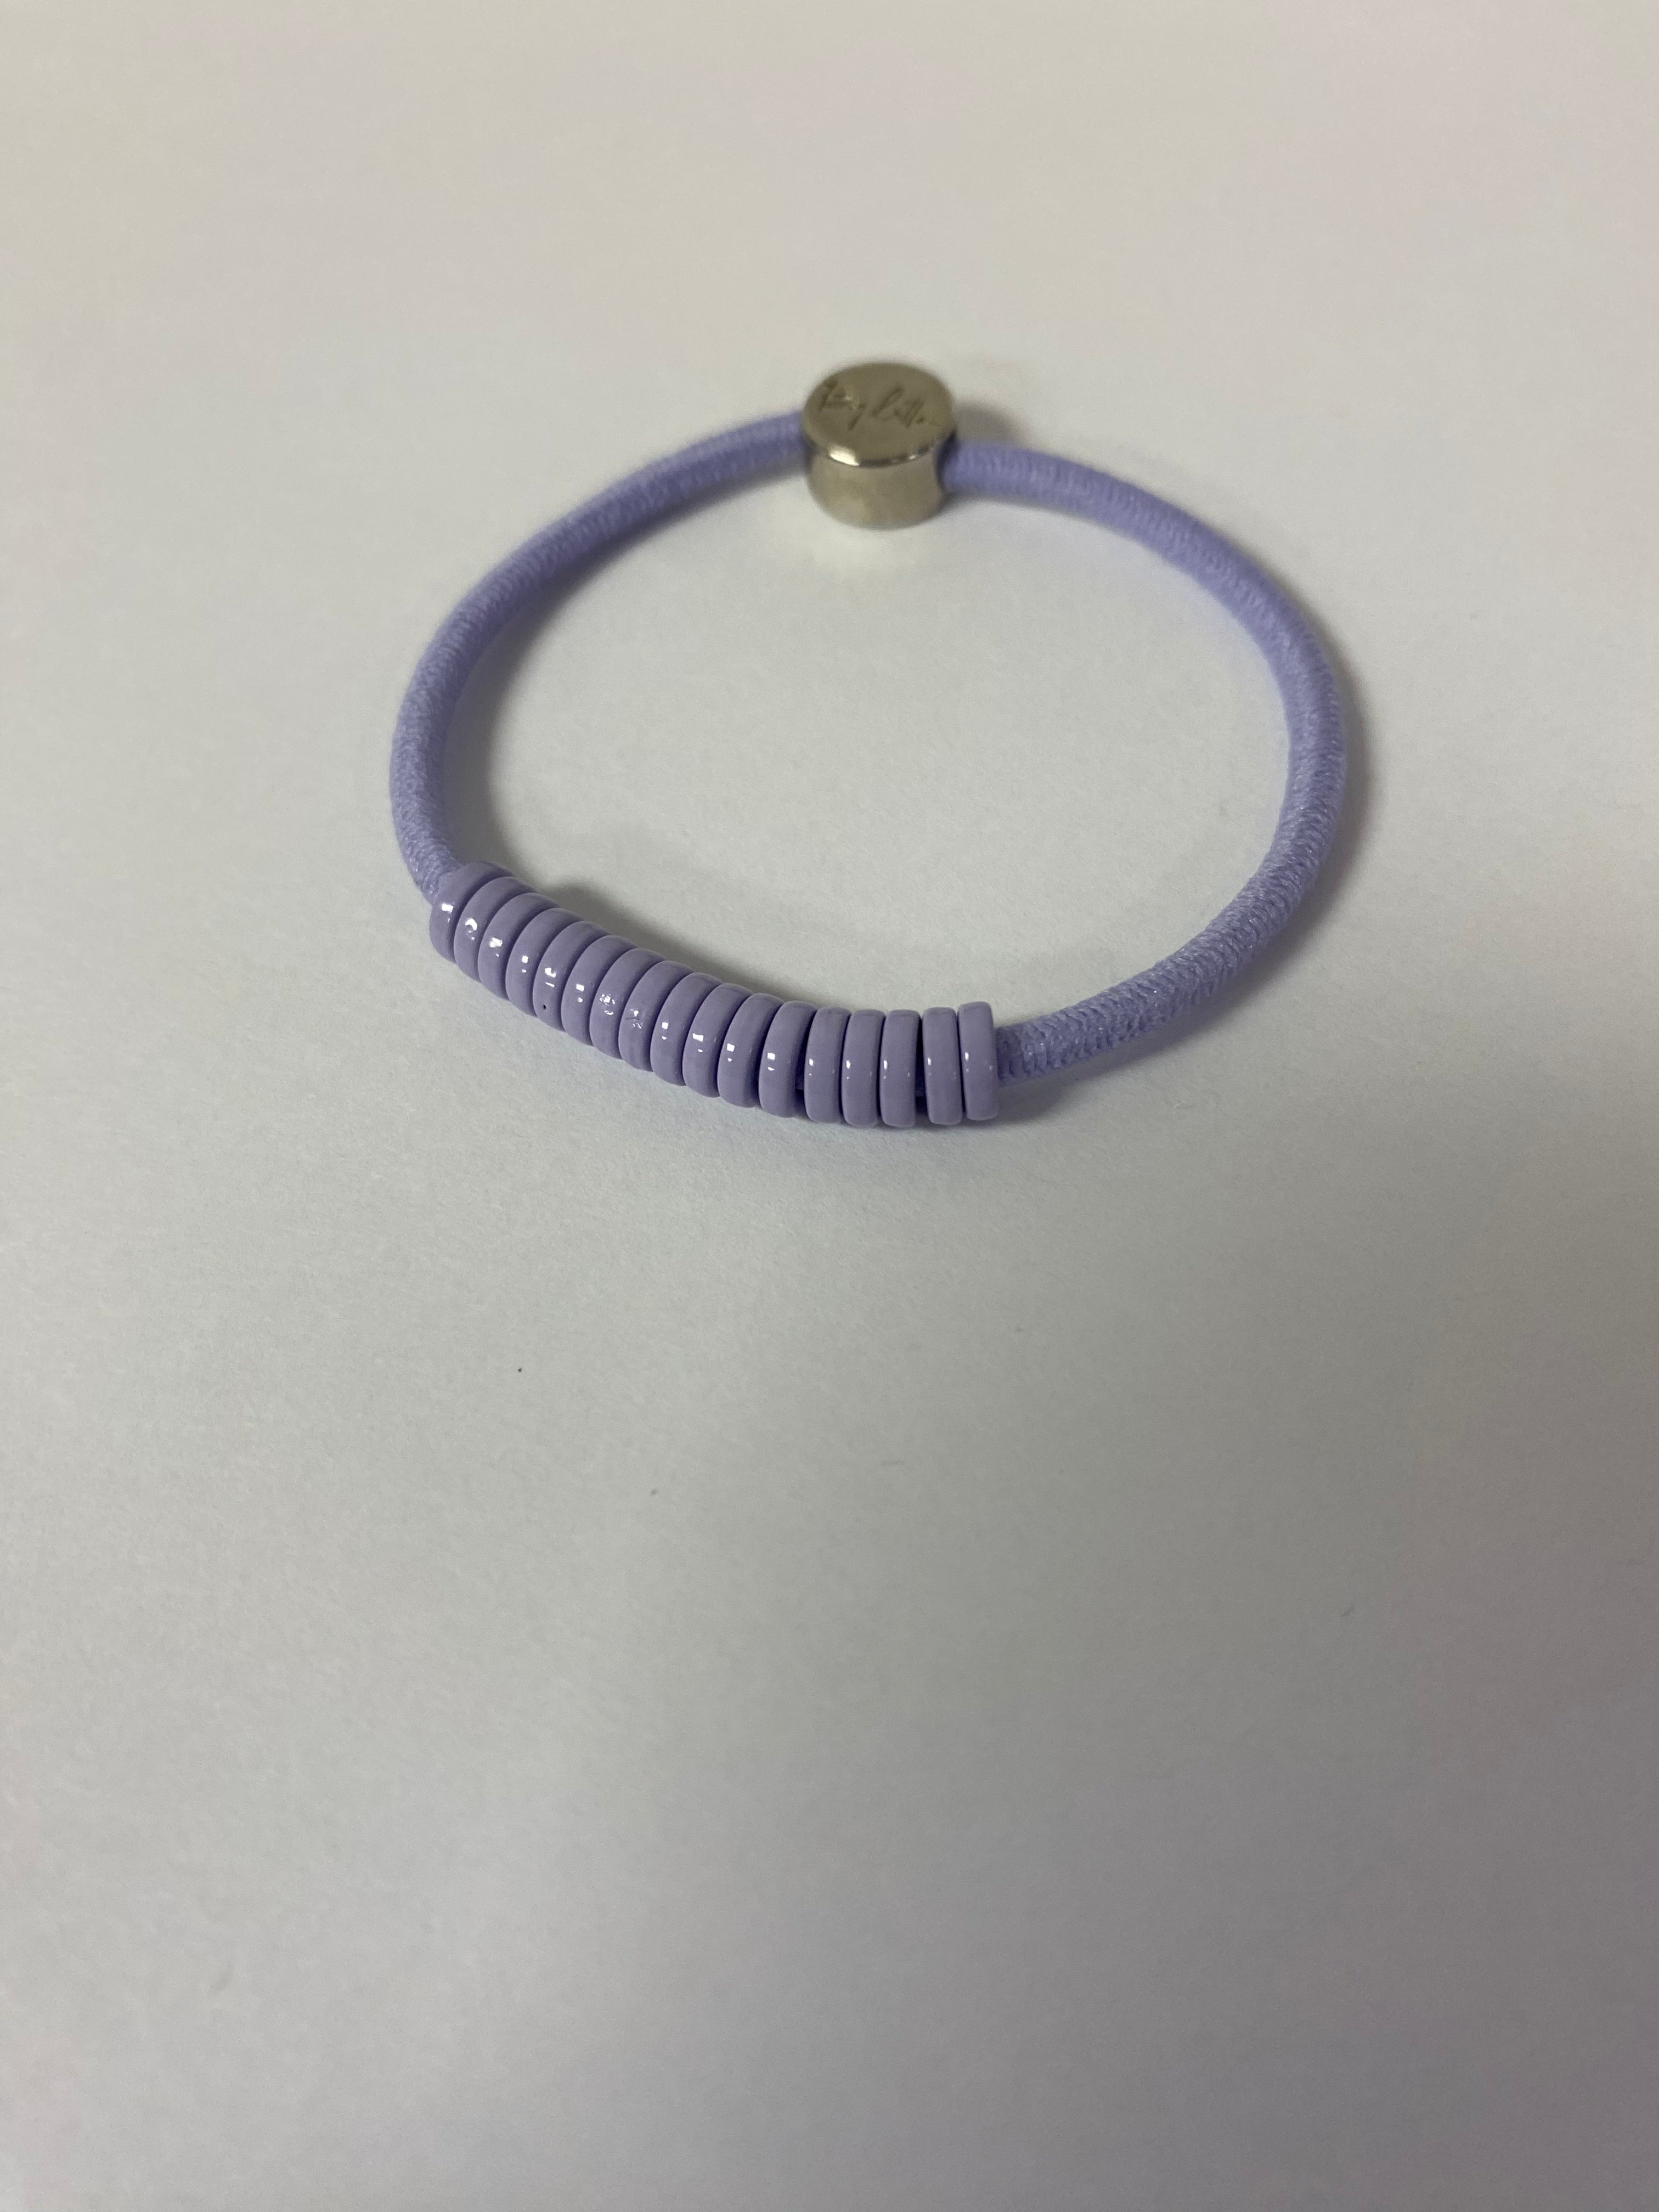 Lavender bylilla hair tie bracelet